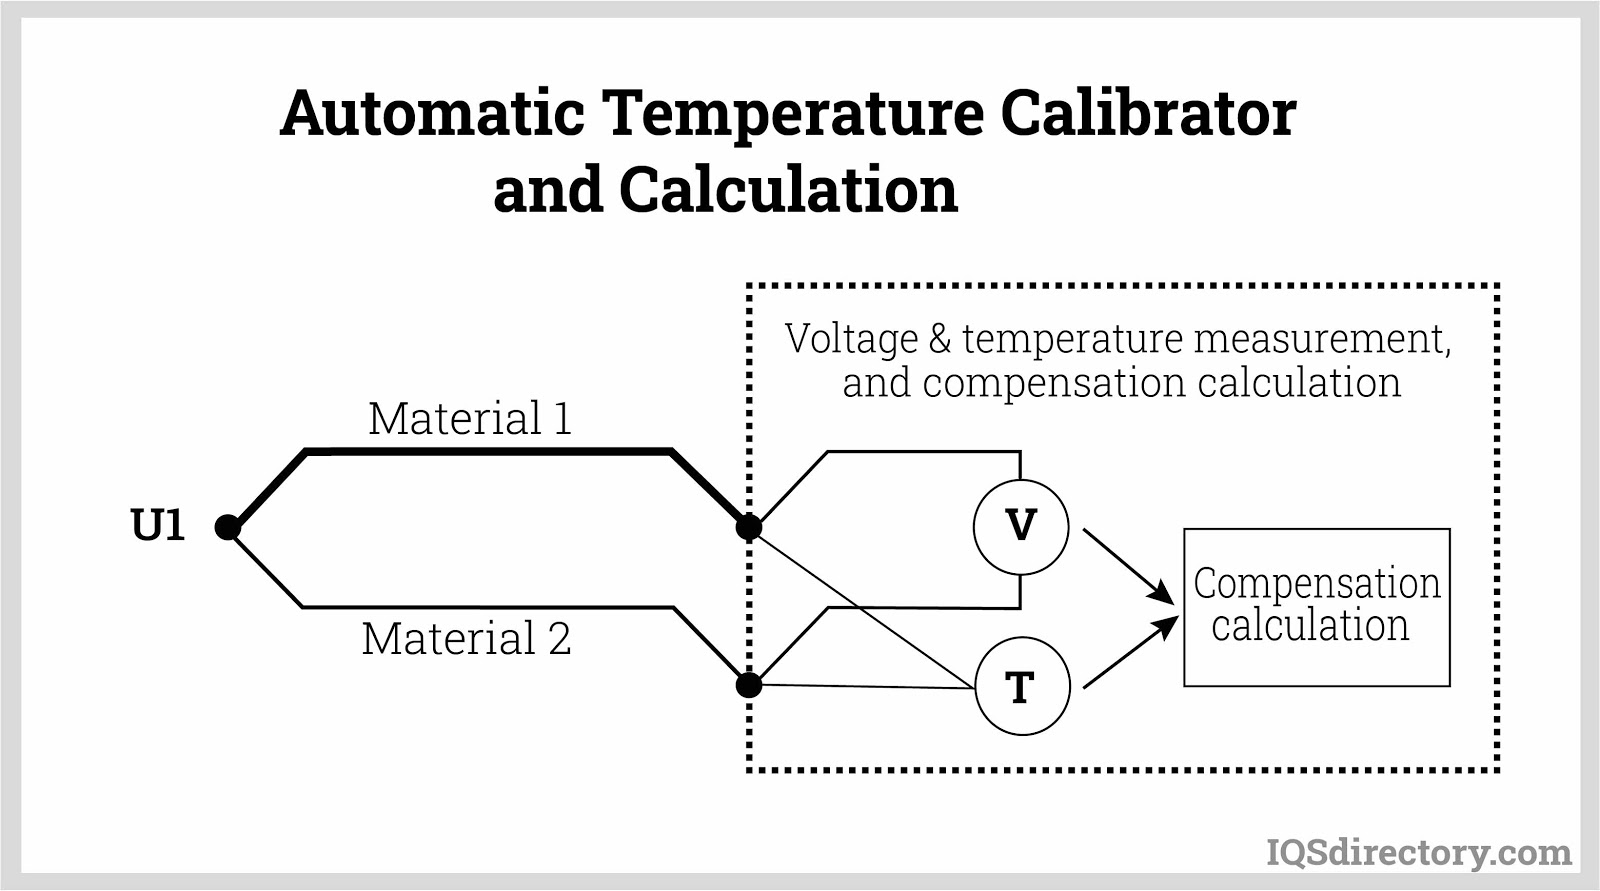 Automatic Temperature Calibrator and Calculation